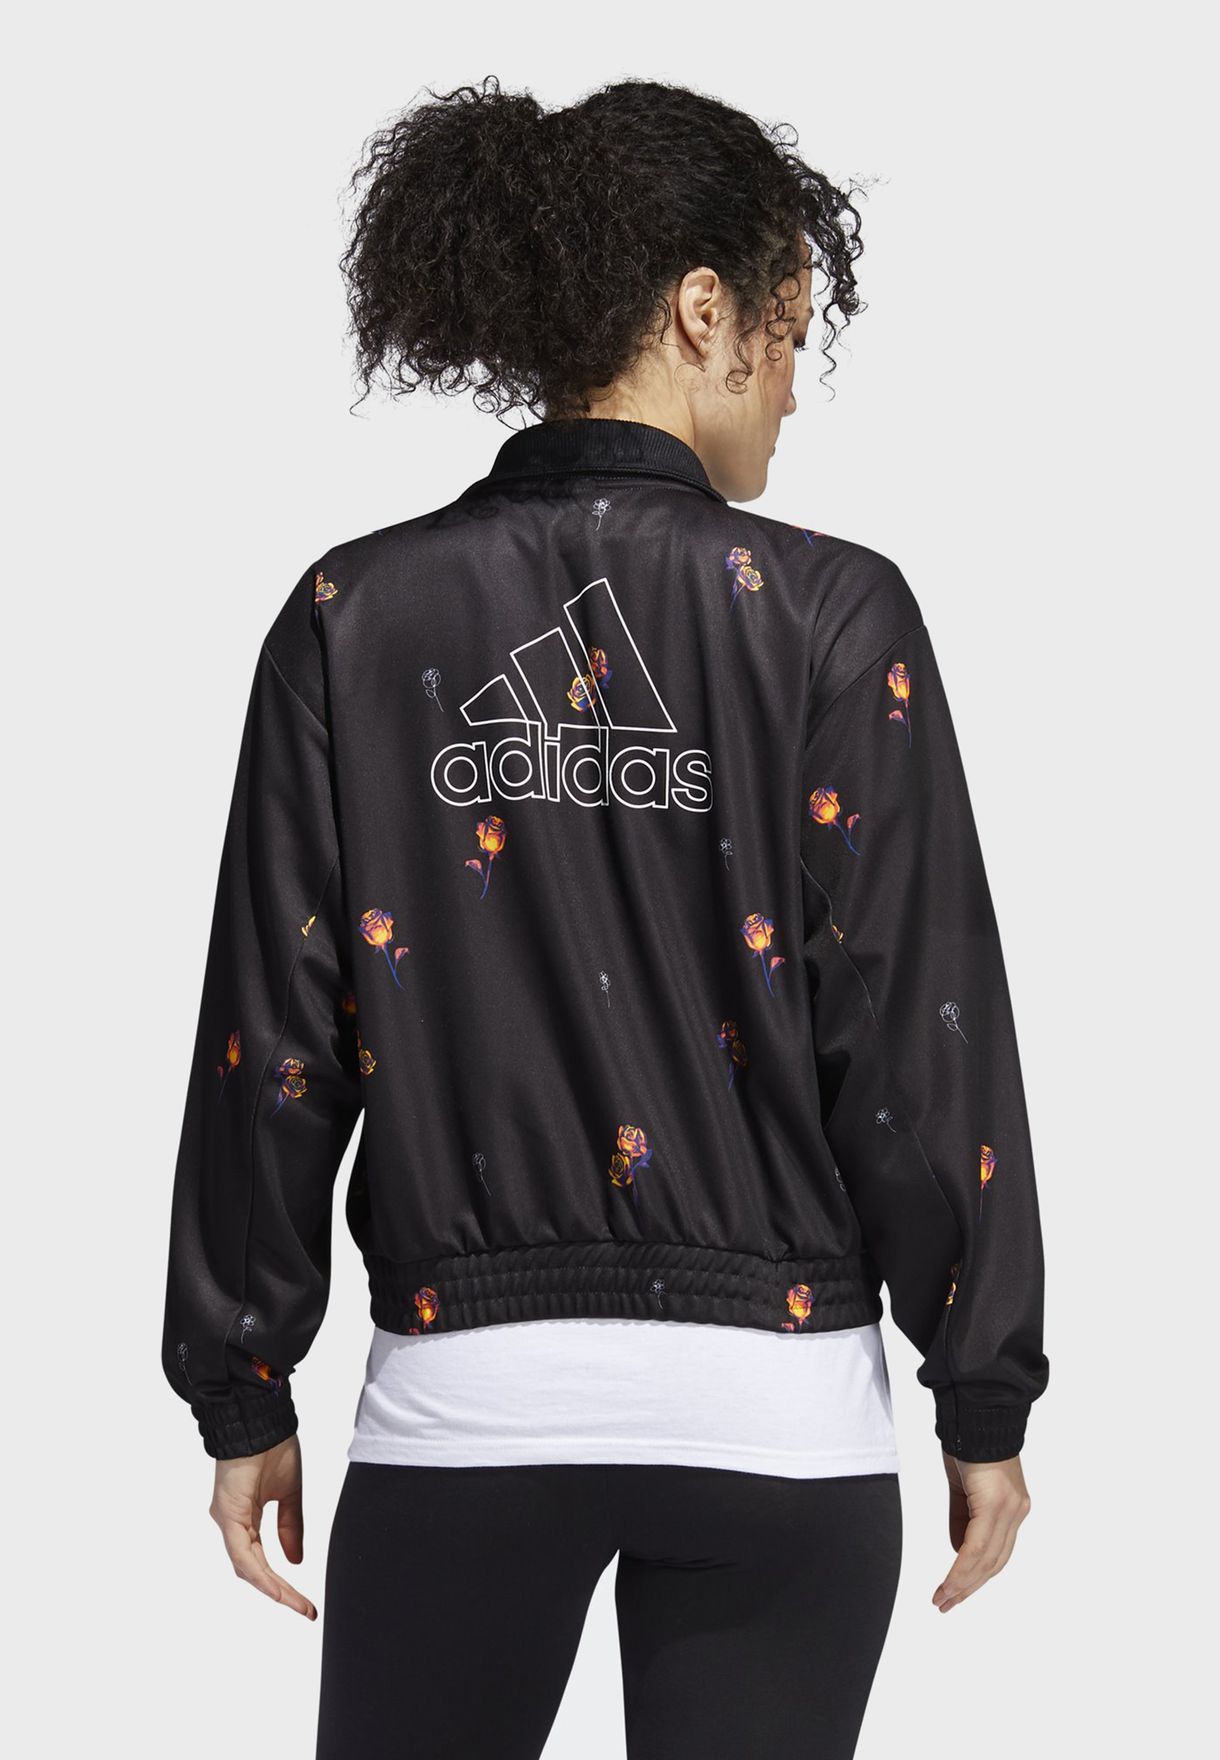 adidas floral track jacket